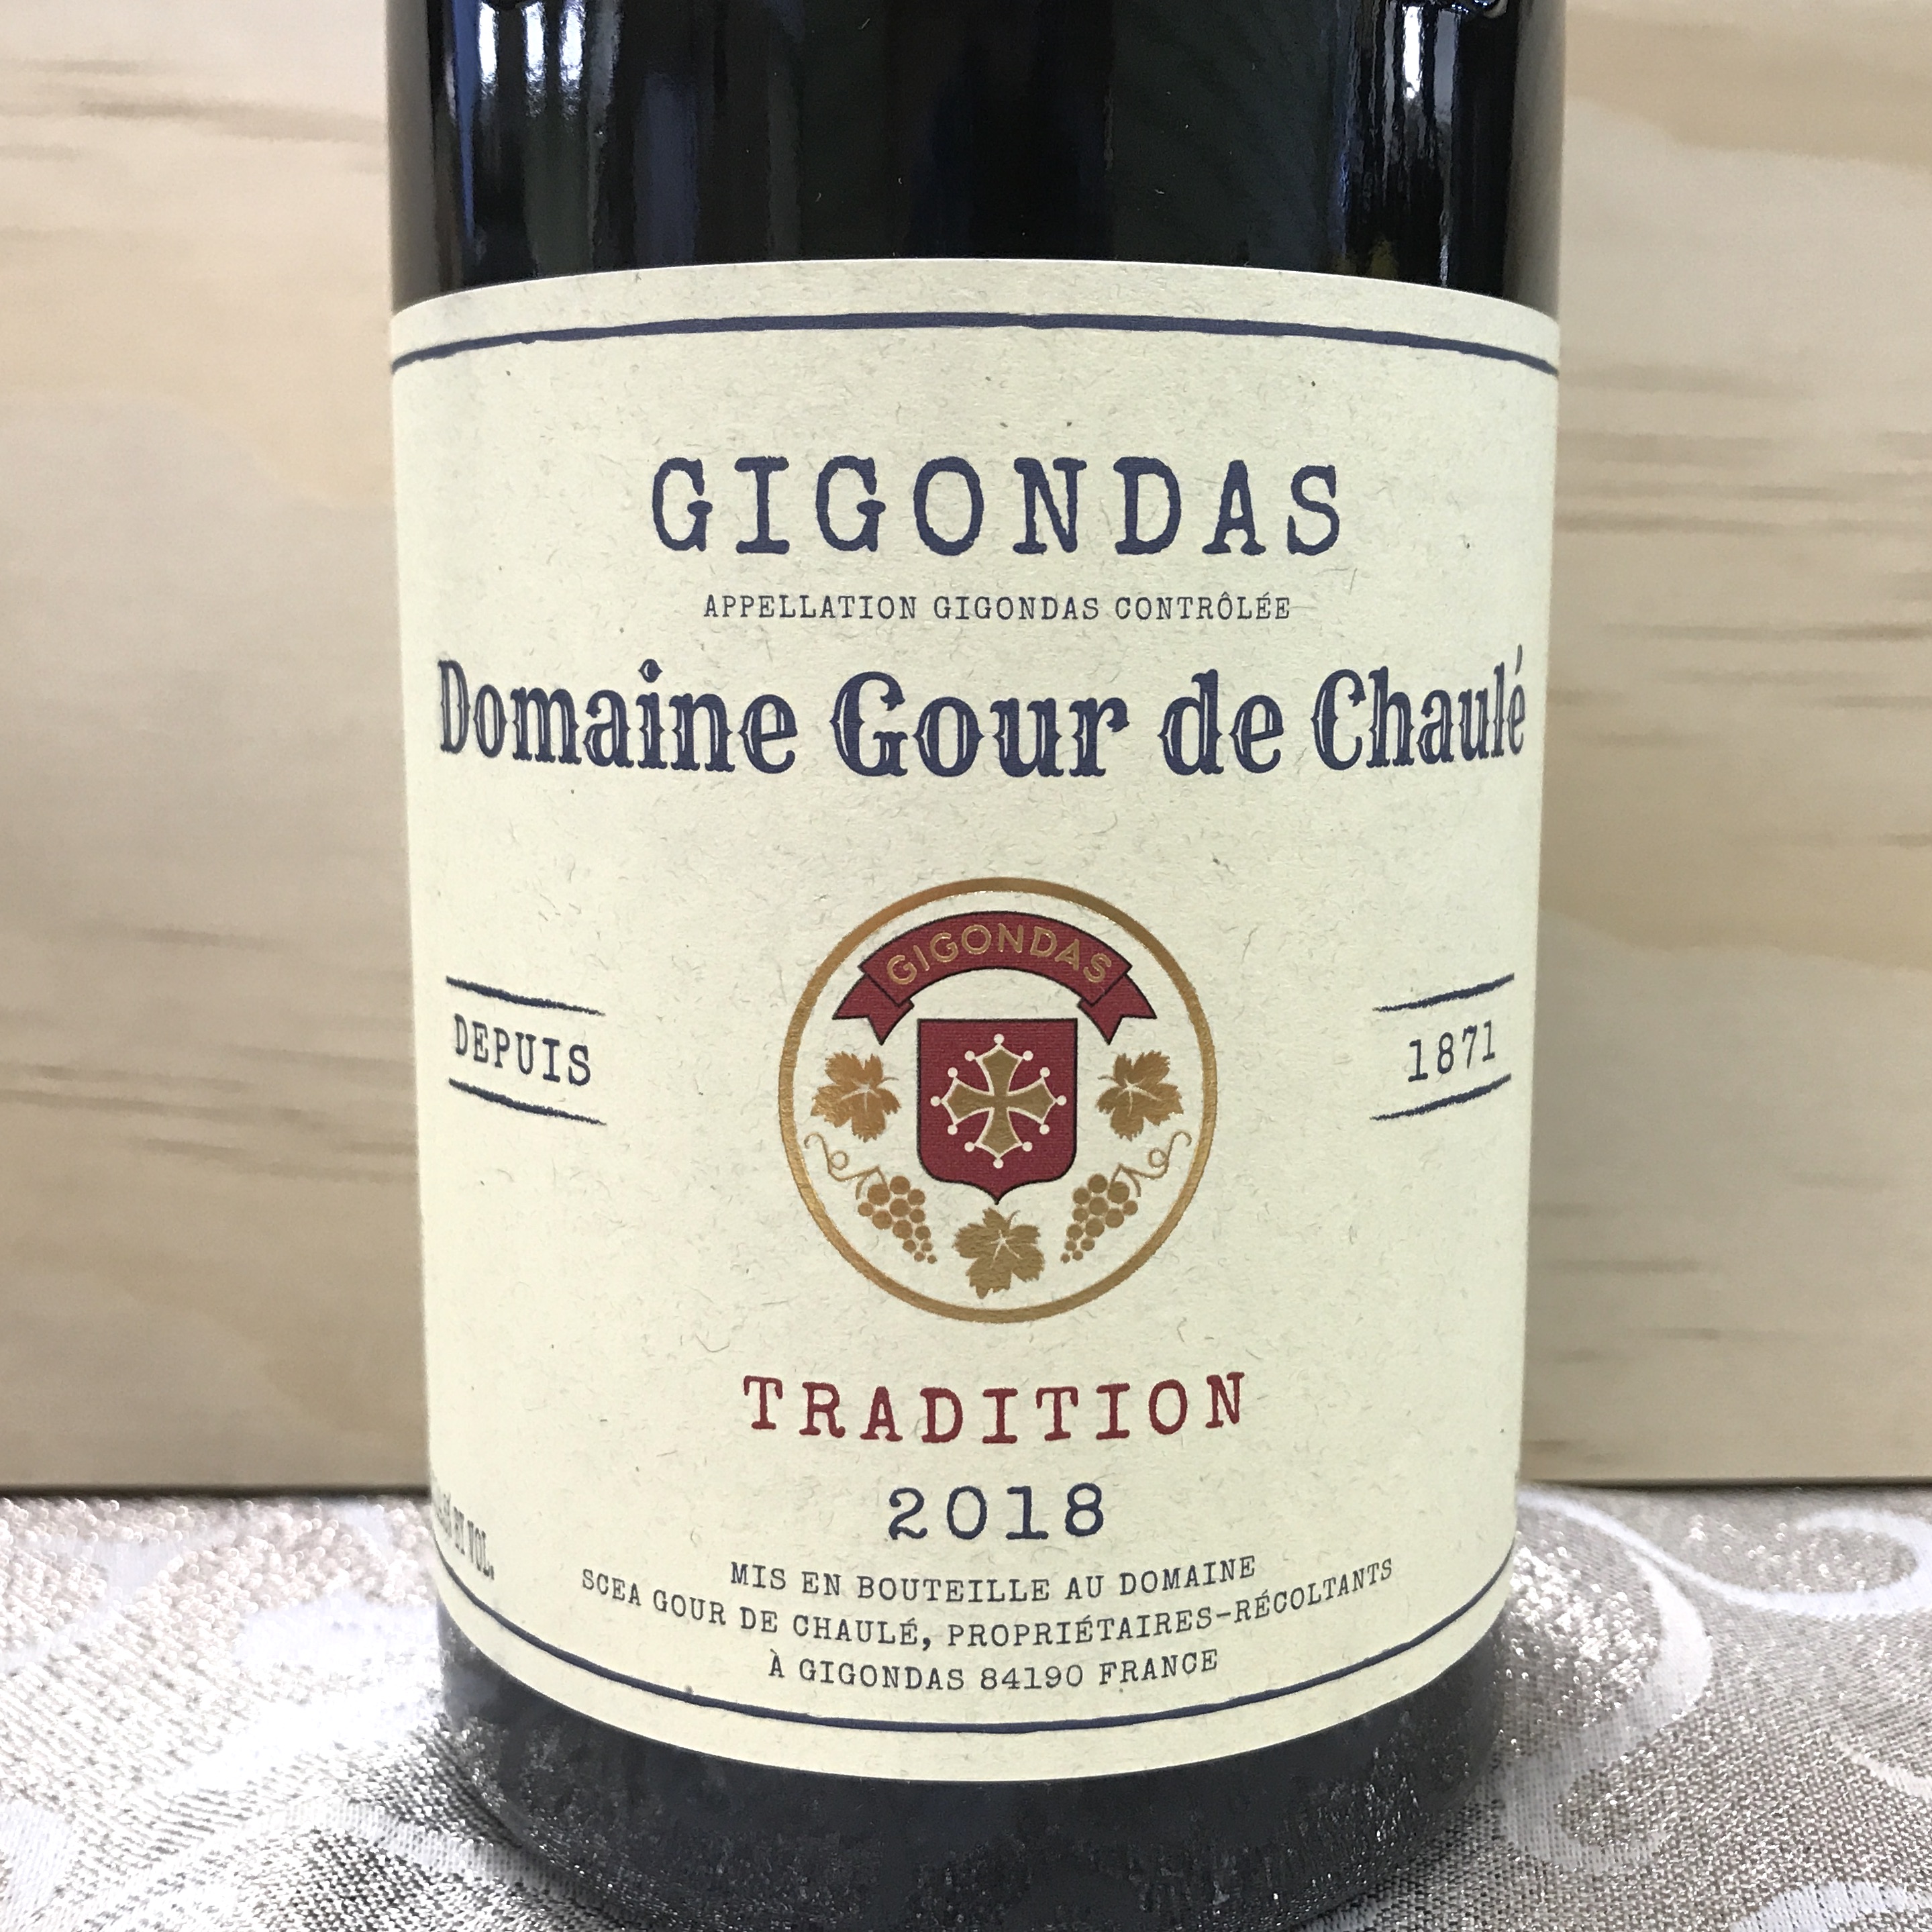 Domaine Gour de Chaule Gigondas Tradition 2018